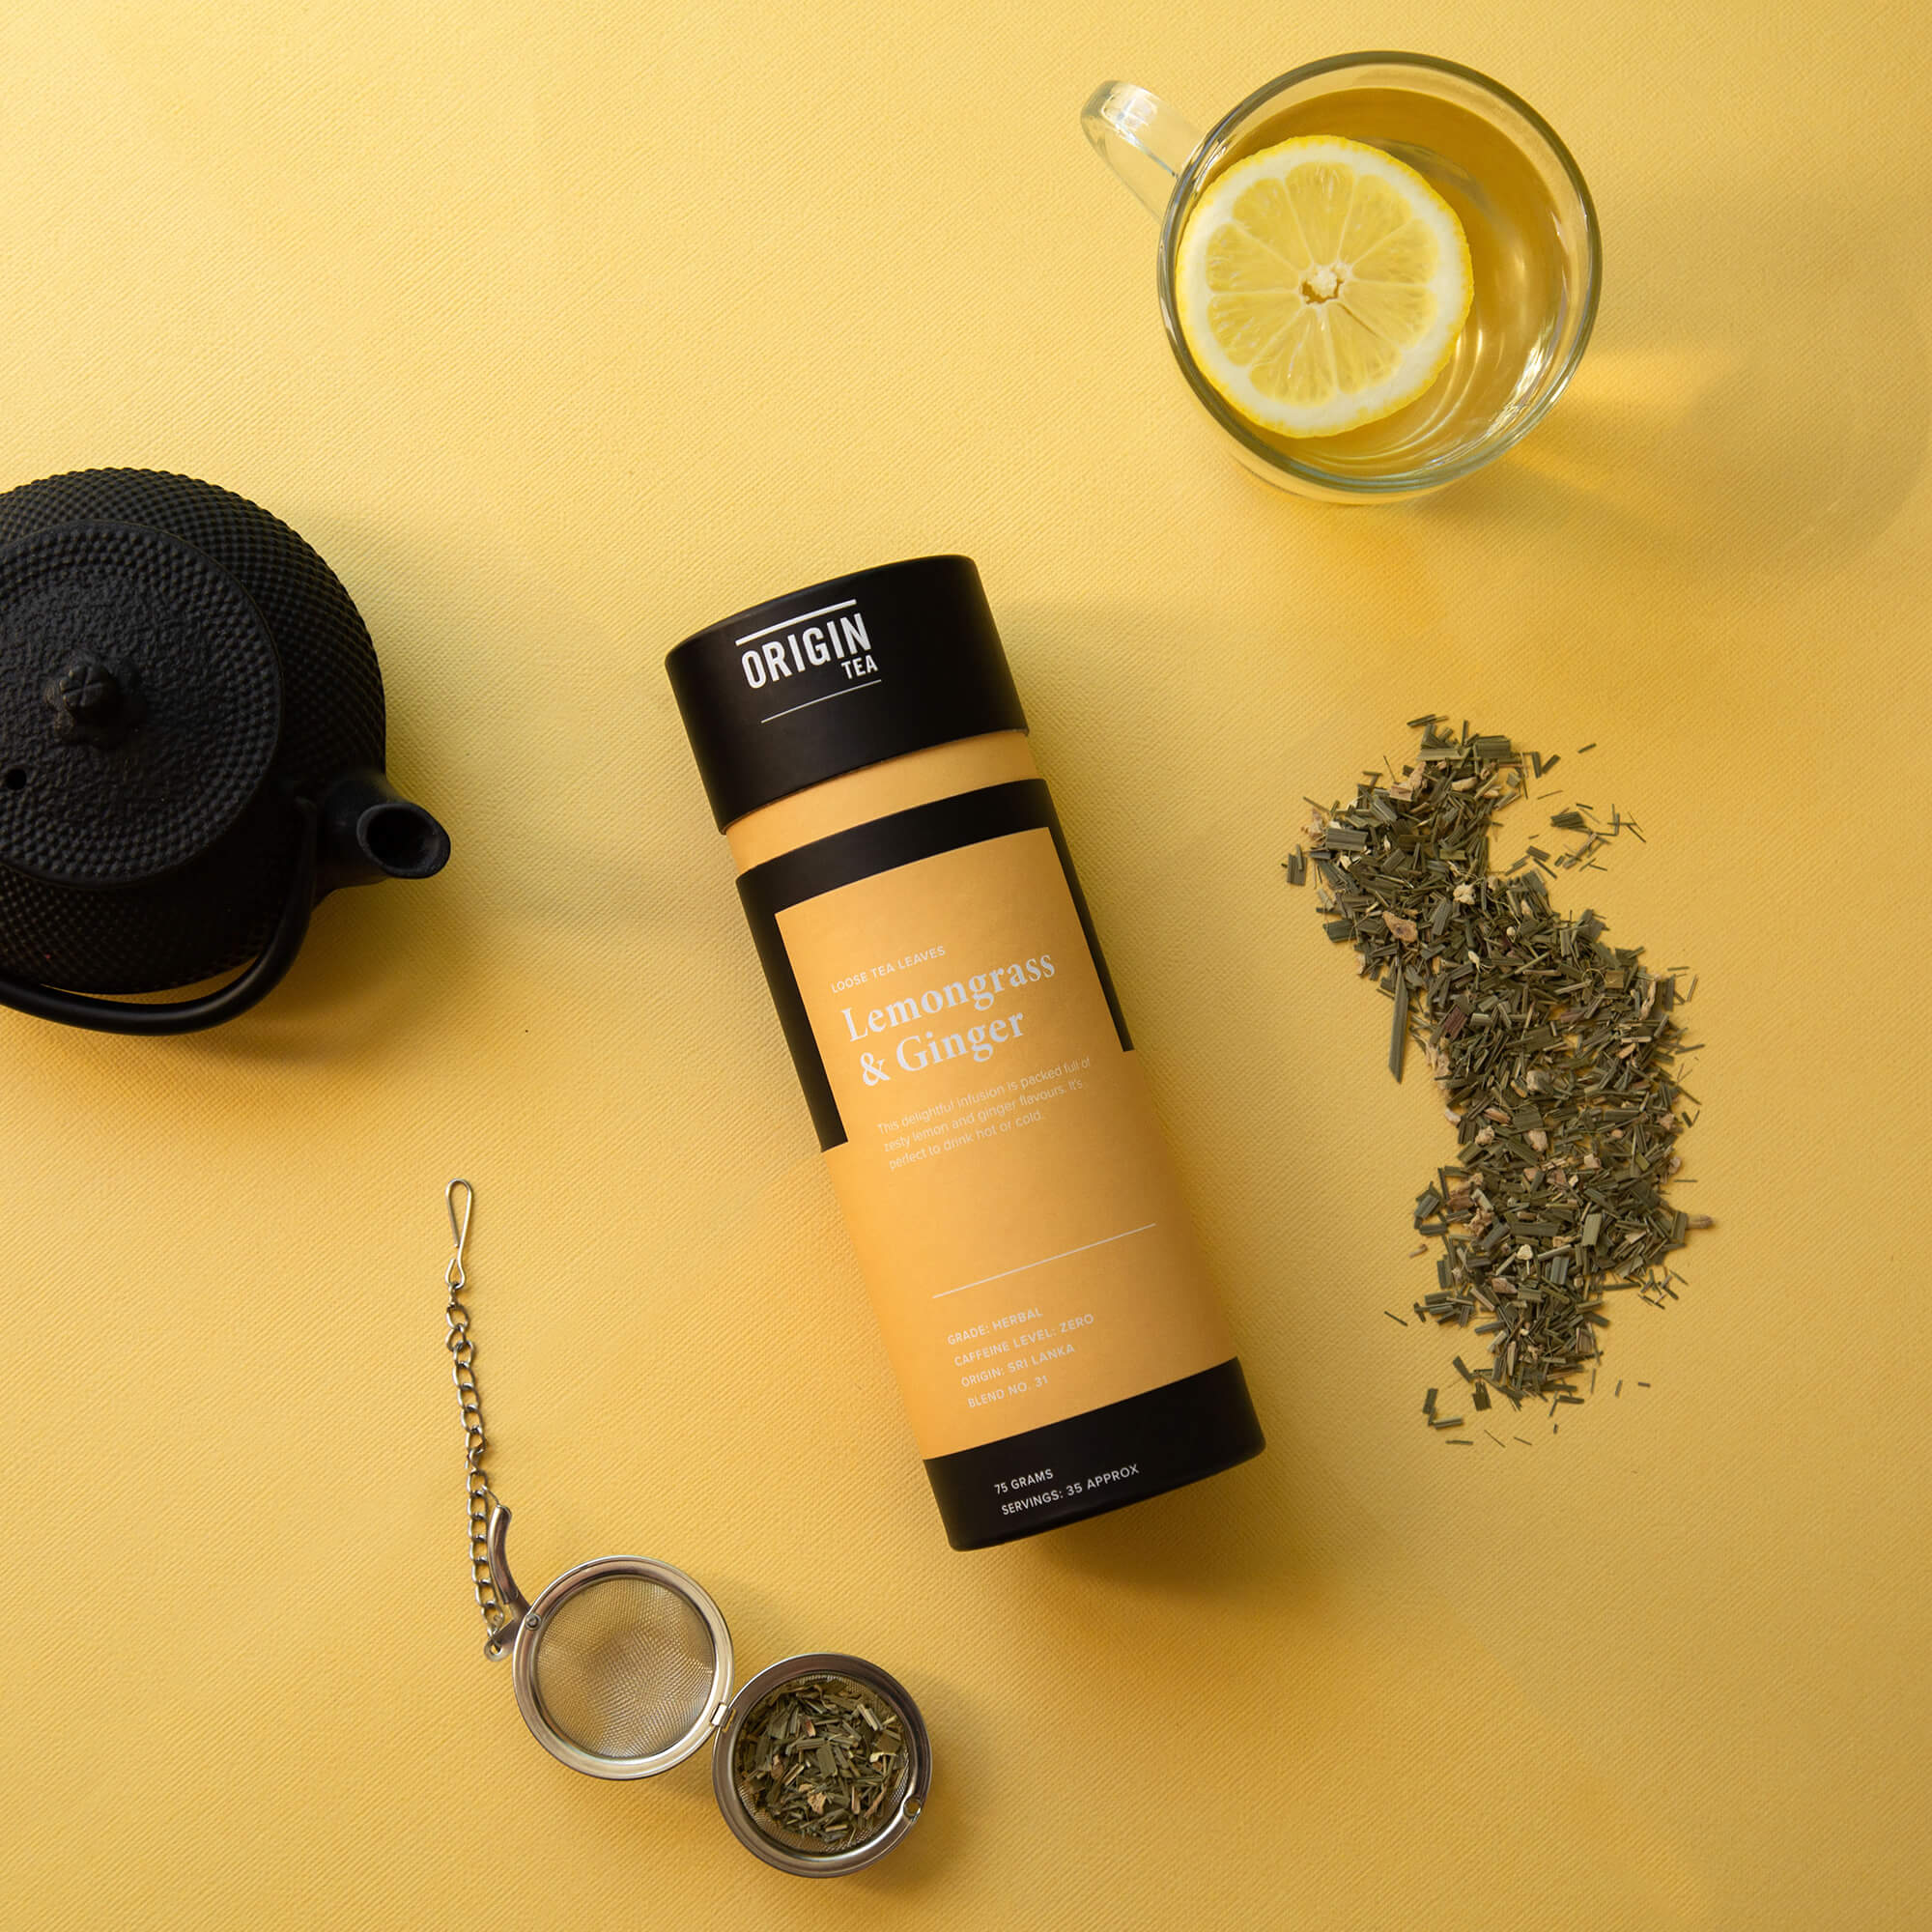 Lemongrass Ginger Caffeine Free Loose Leaf Herbal Tea - 75g - Origin Tea